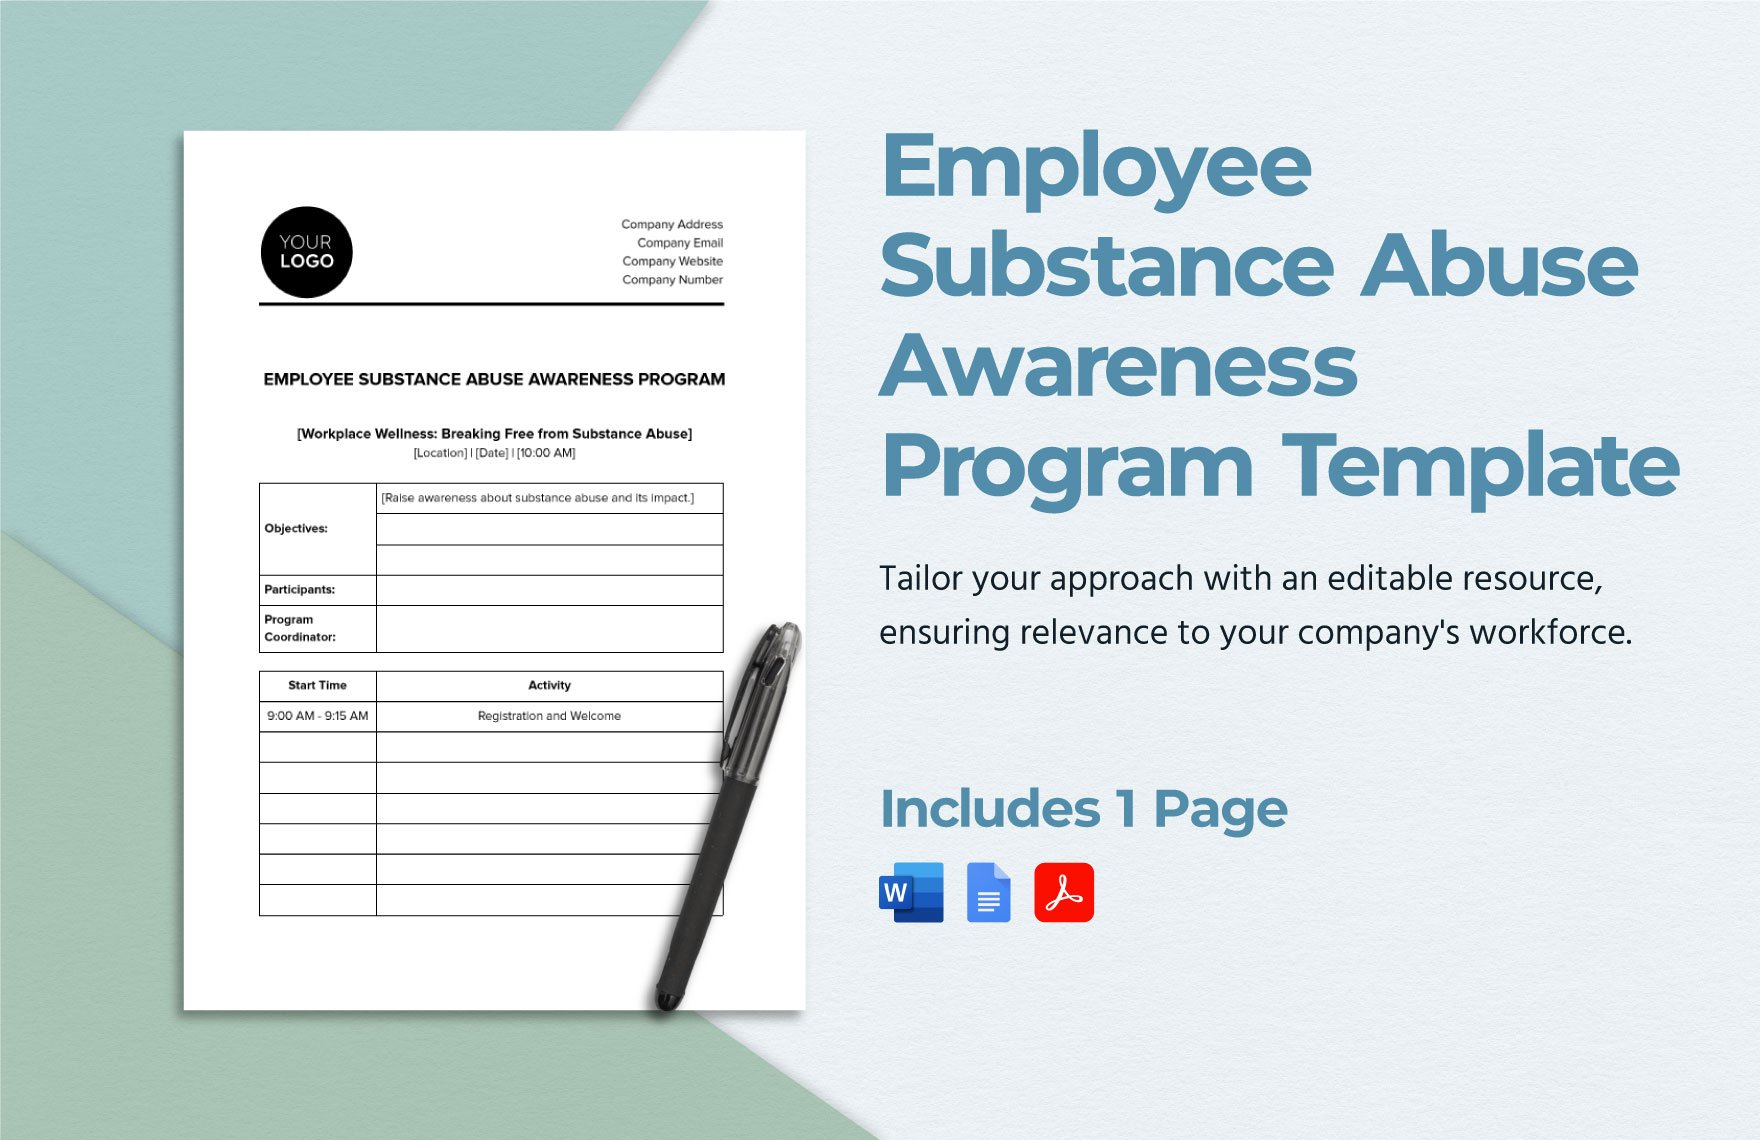 Employee Substance Abuse Awareness Program Template